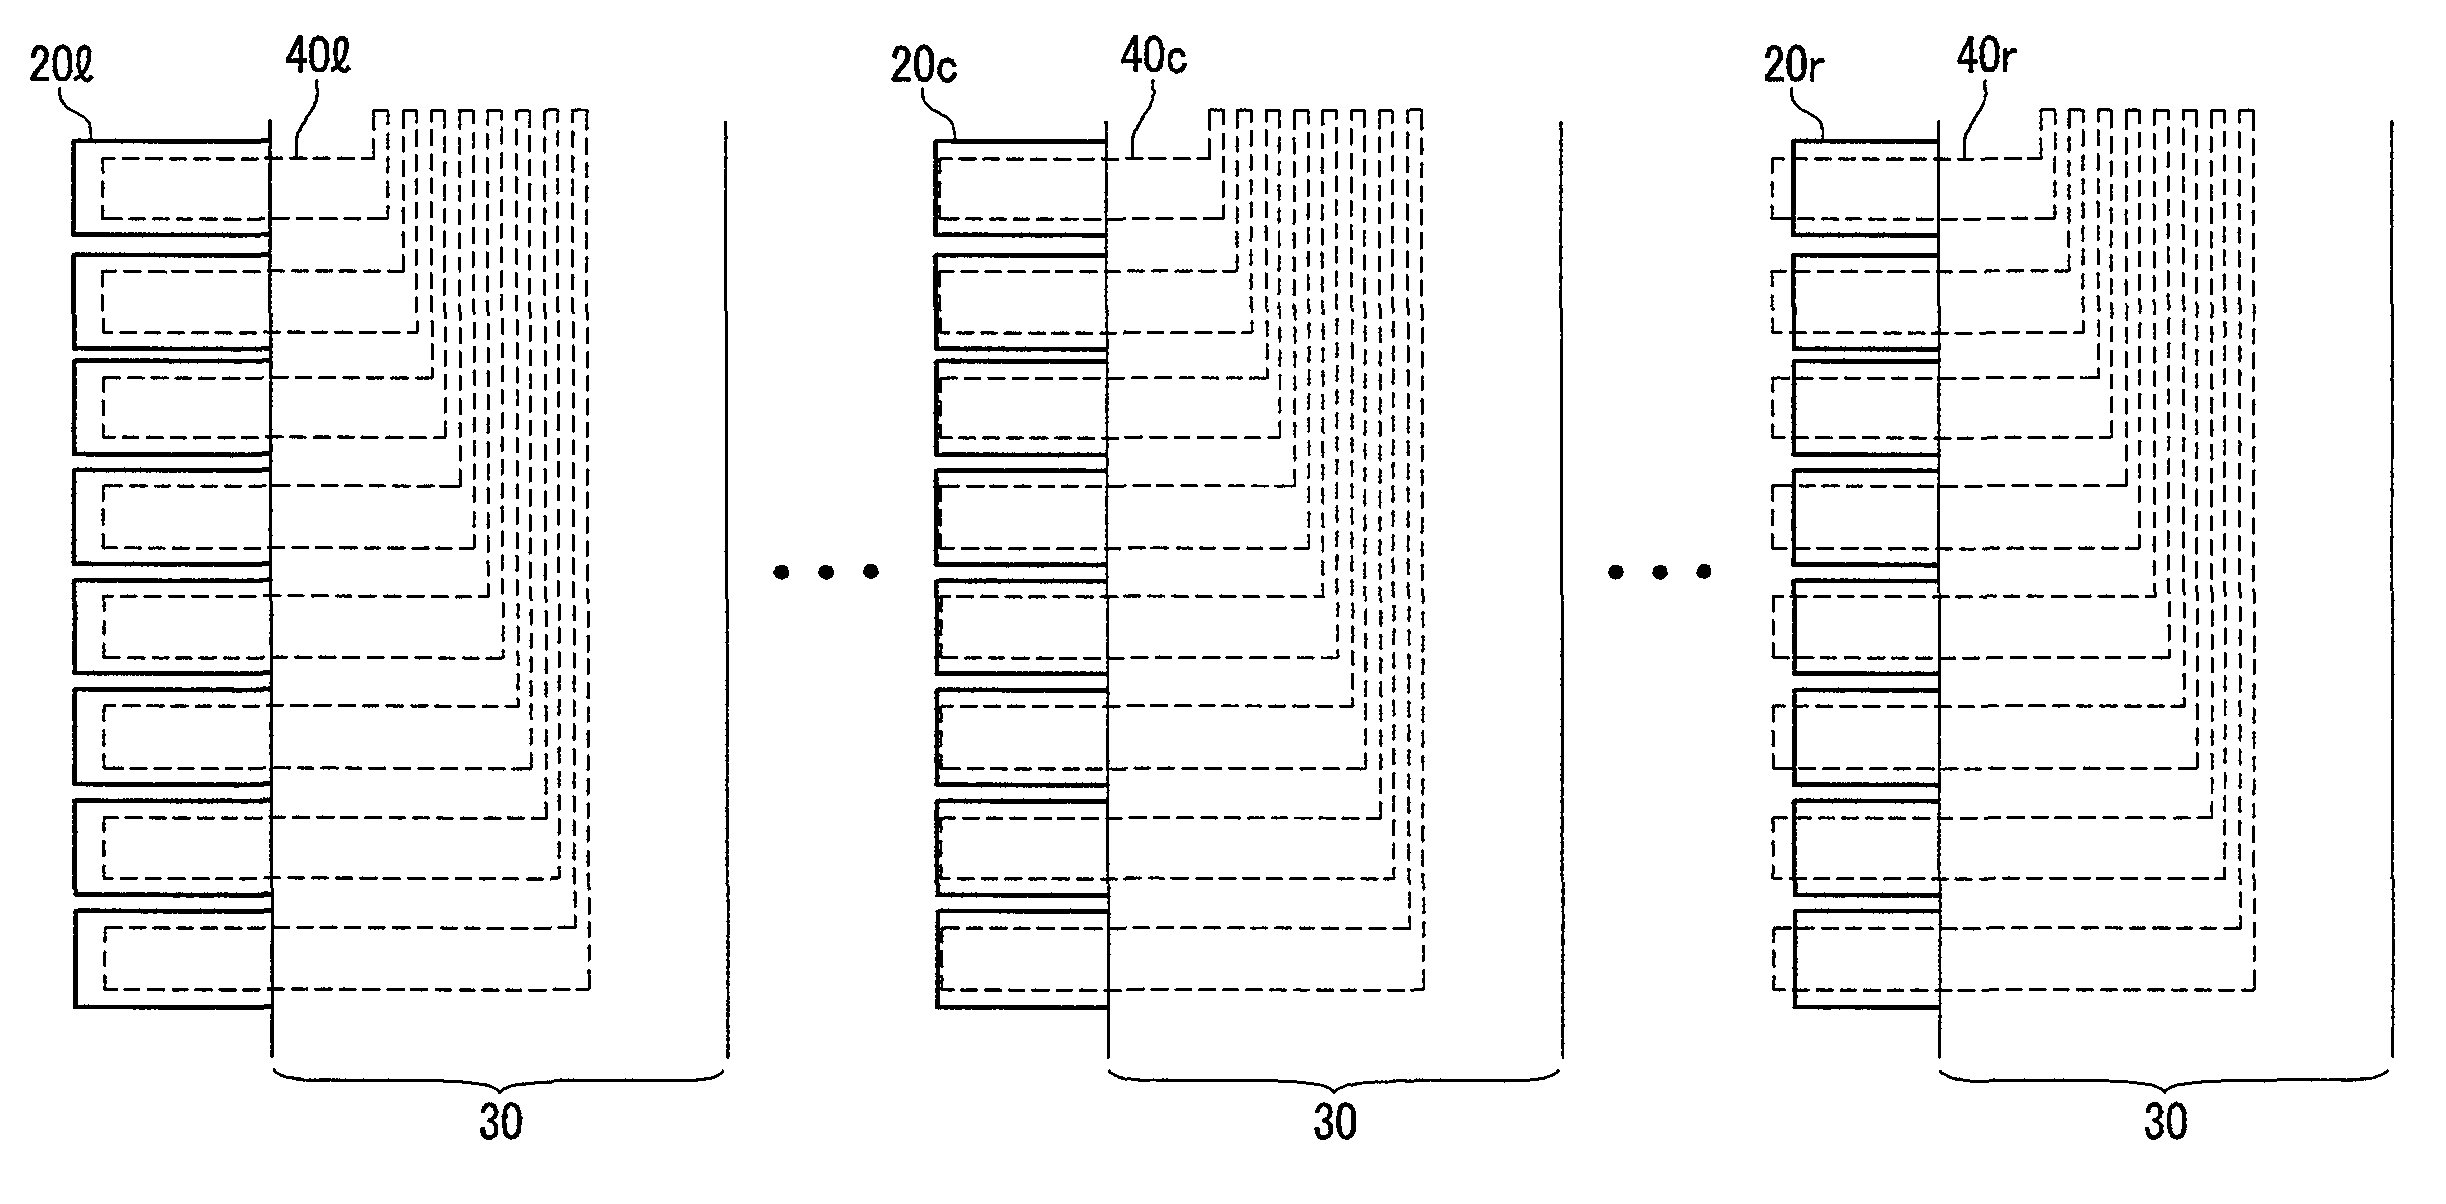 Thin film transistor array panel